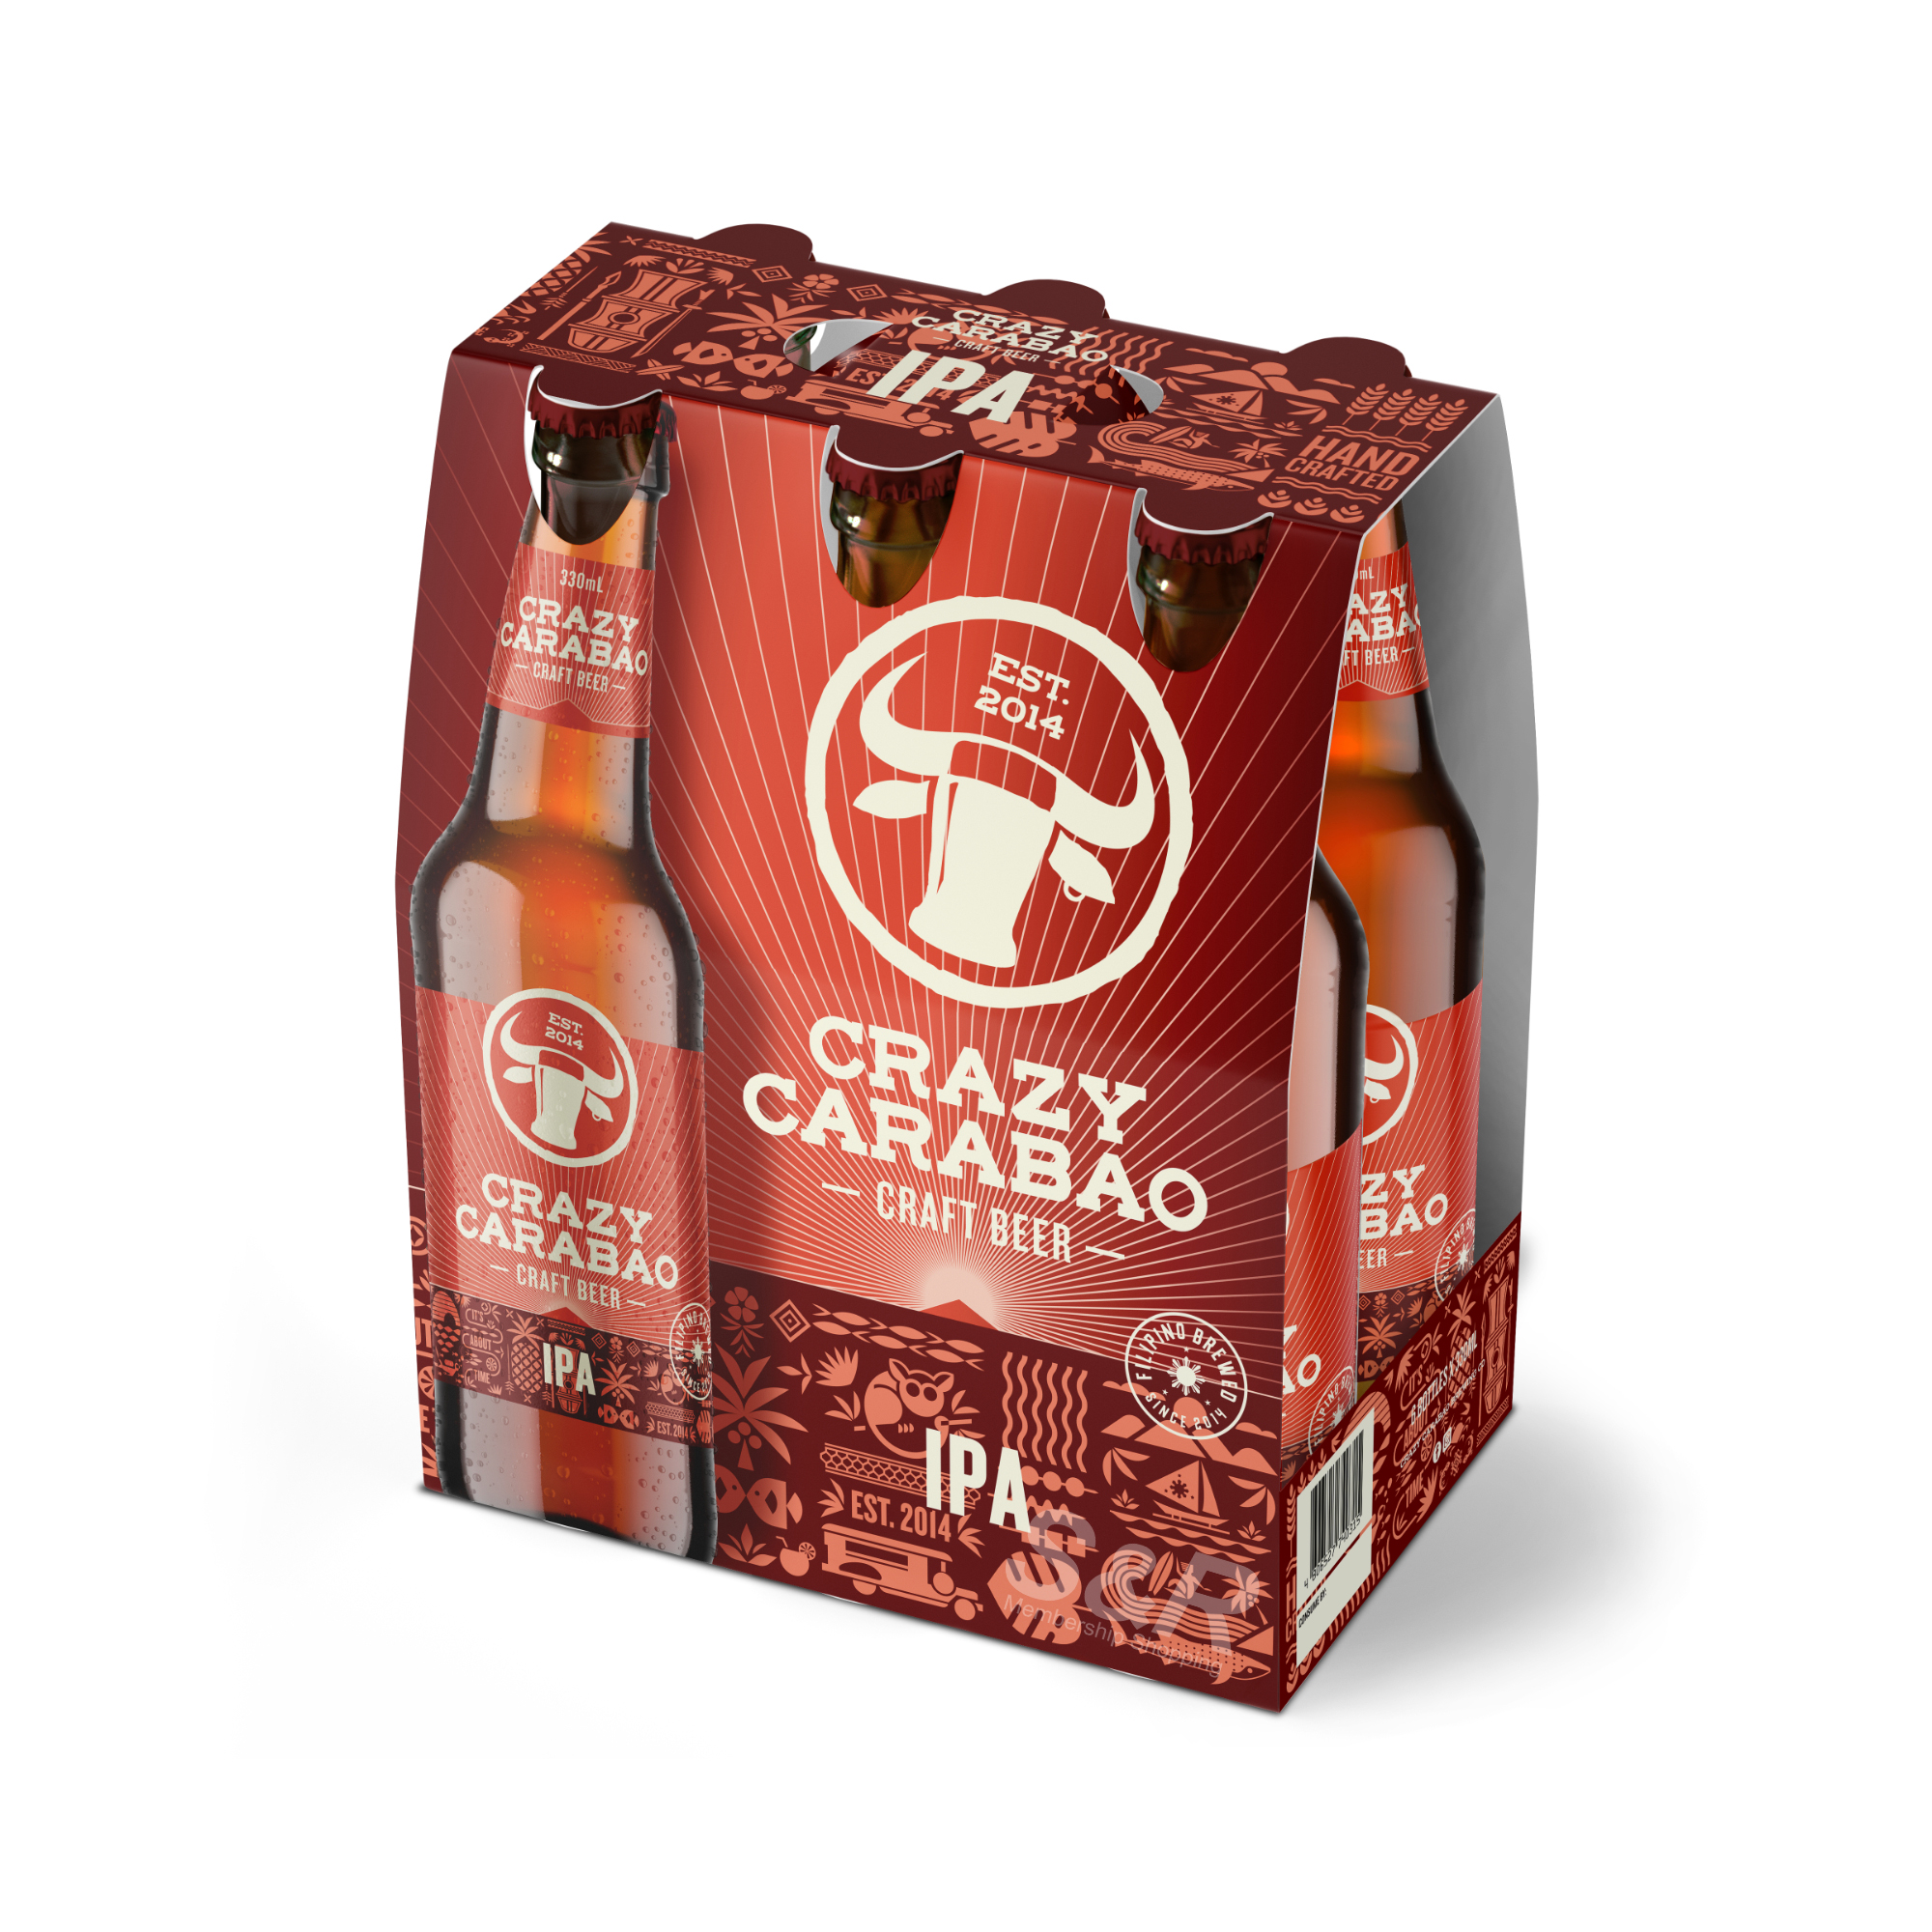 Crazy Carabao India Pale Ale Craft Beer 6 bottles